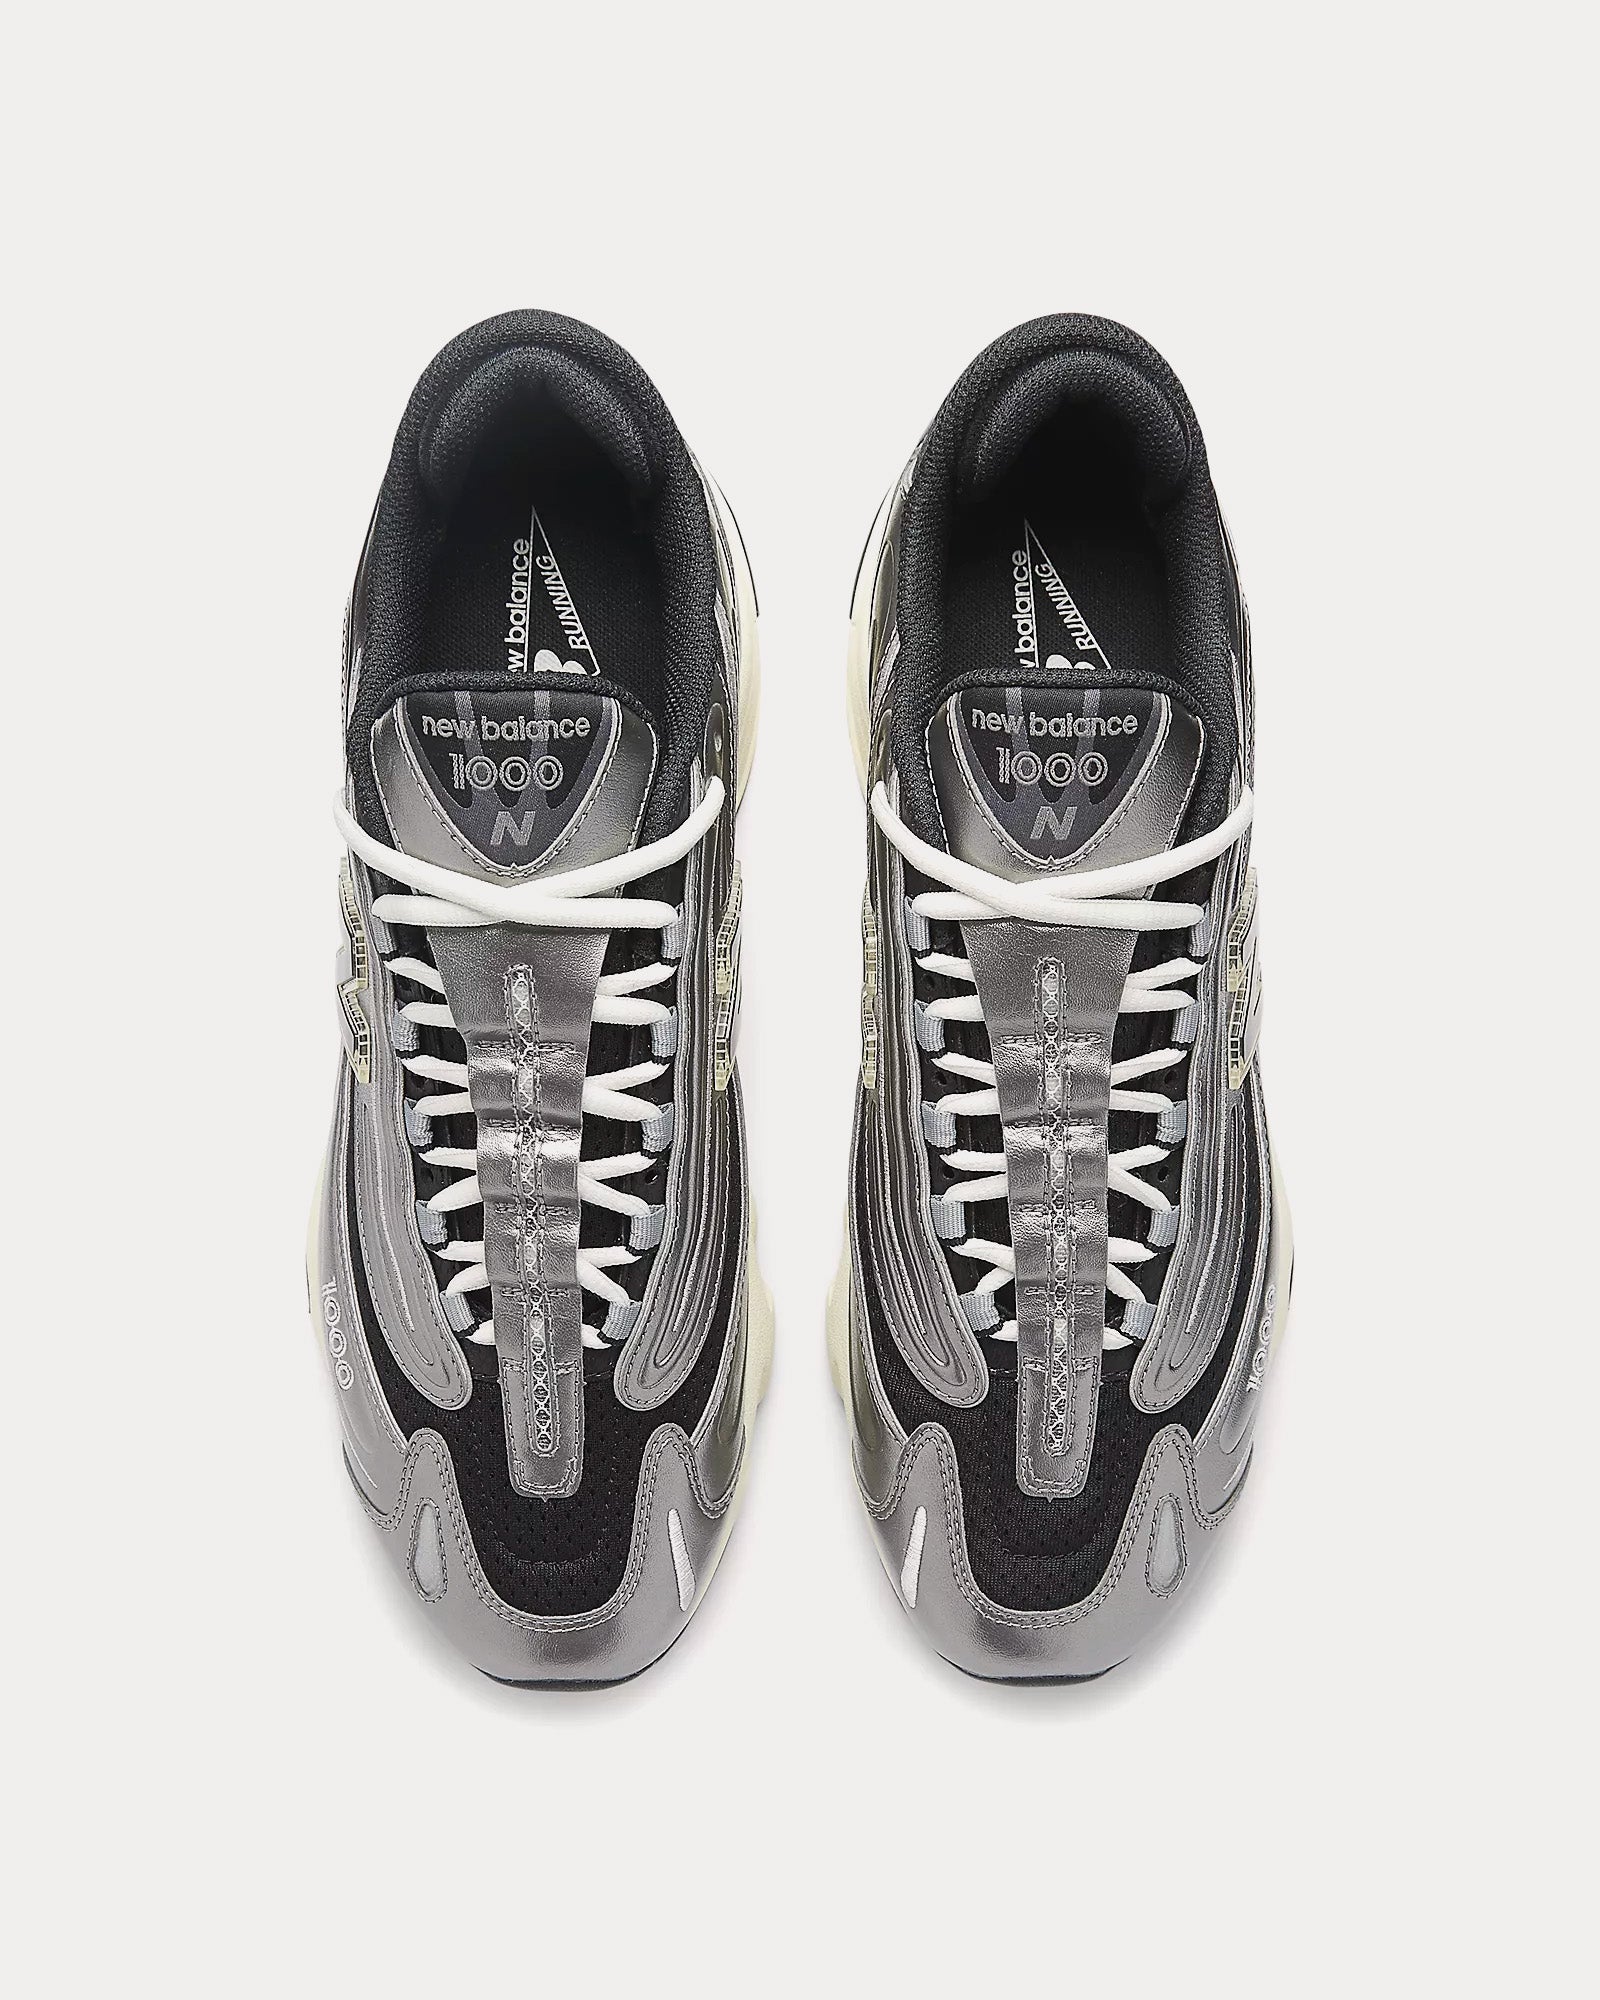 New Balance - 1000 Silver Metallic / Black/ Dawn Glow Low Top Sneakers